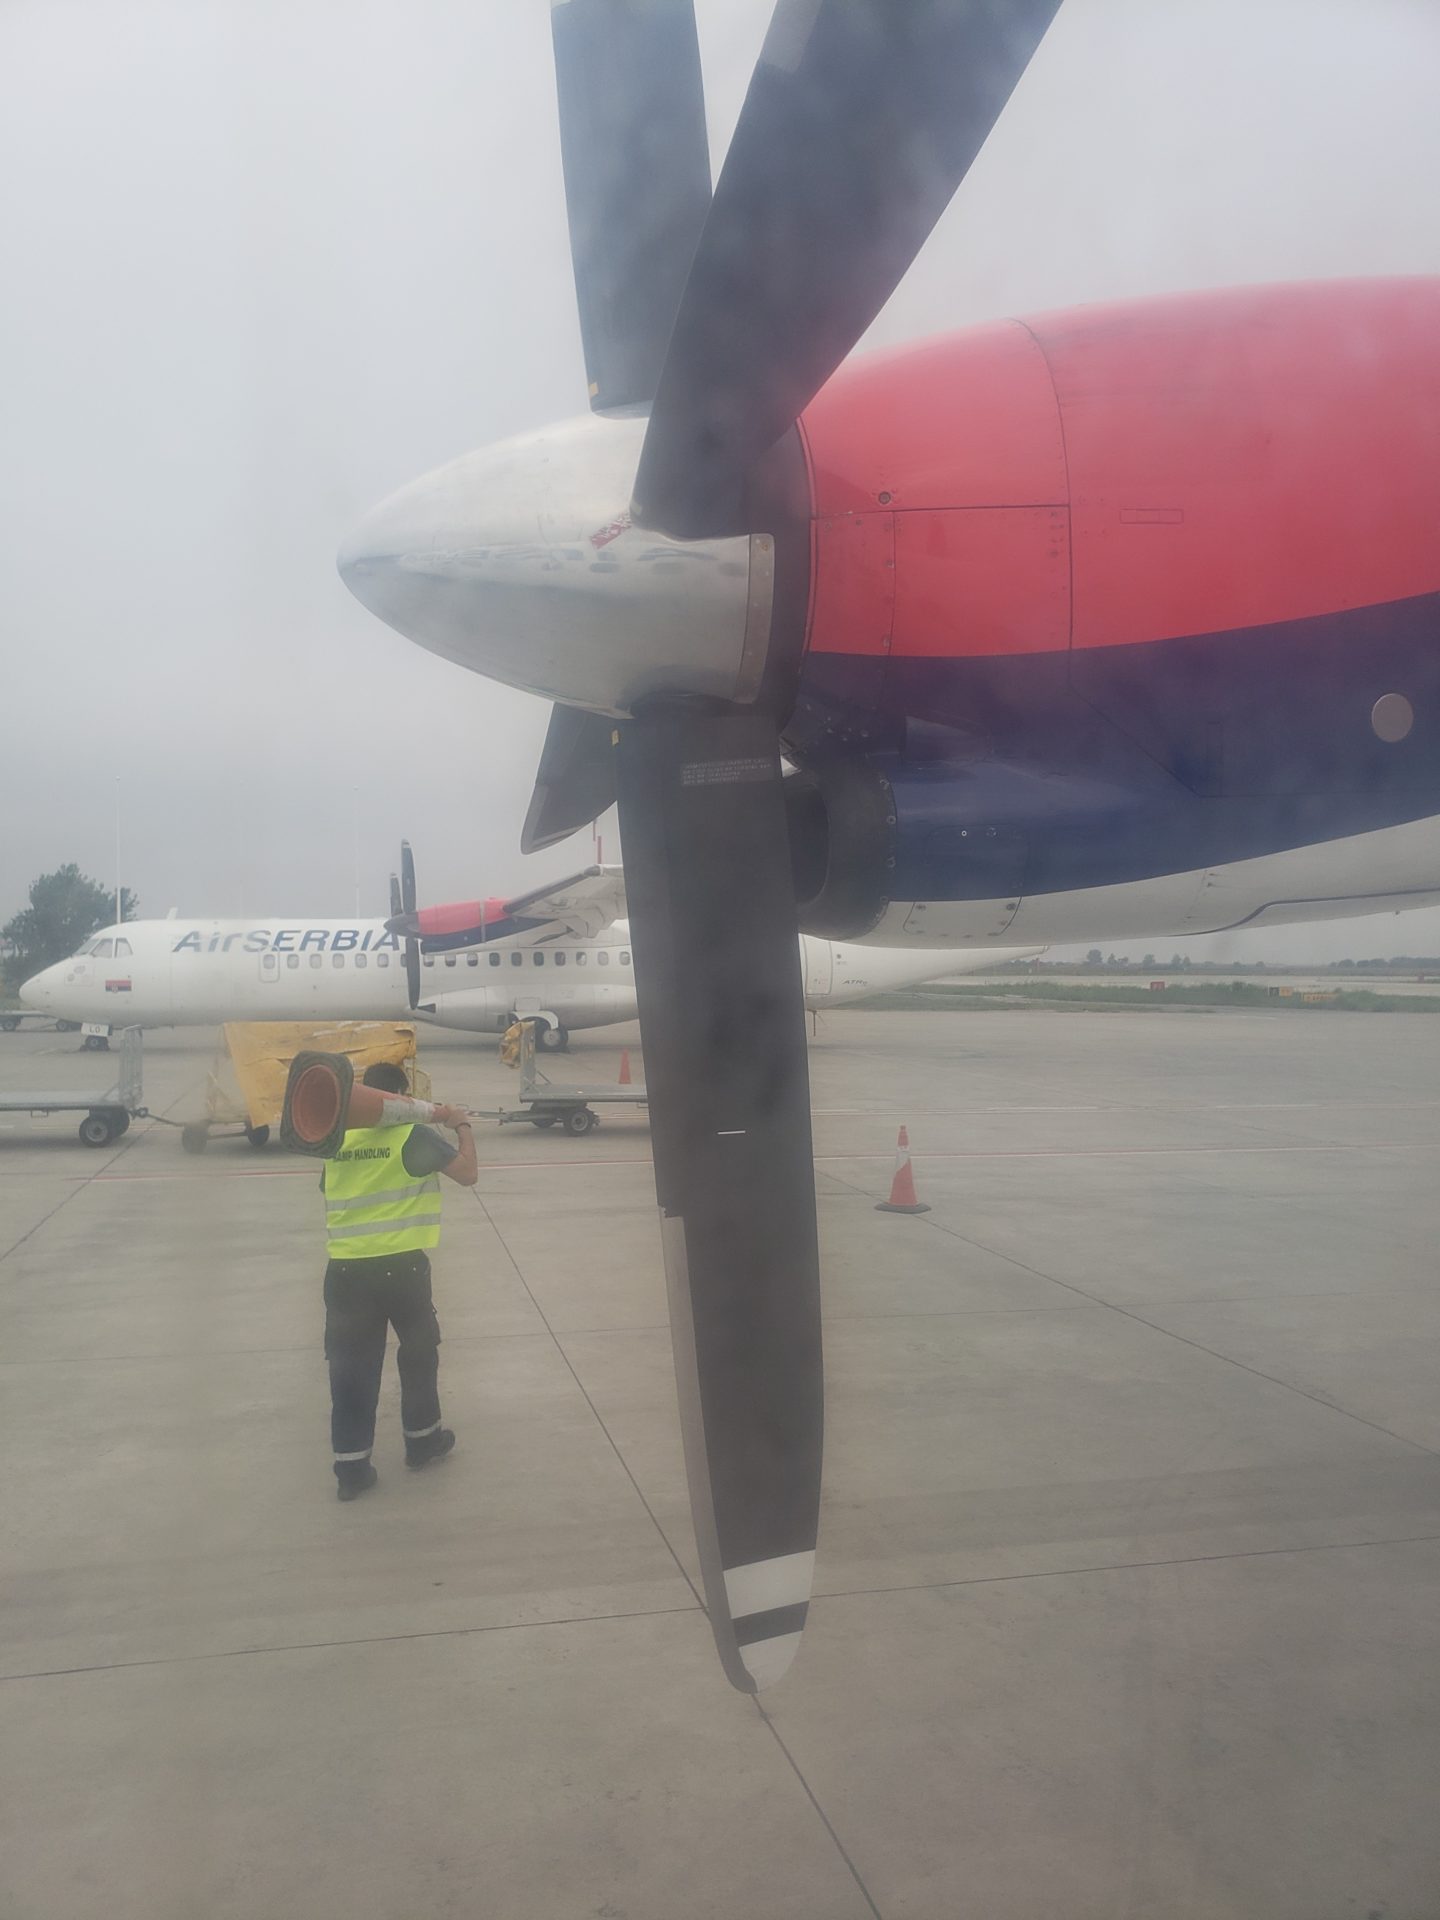 a man standing next to a propeller of a plane